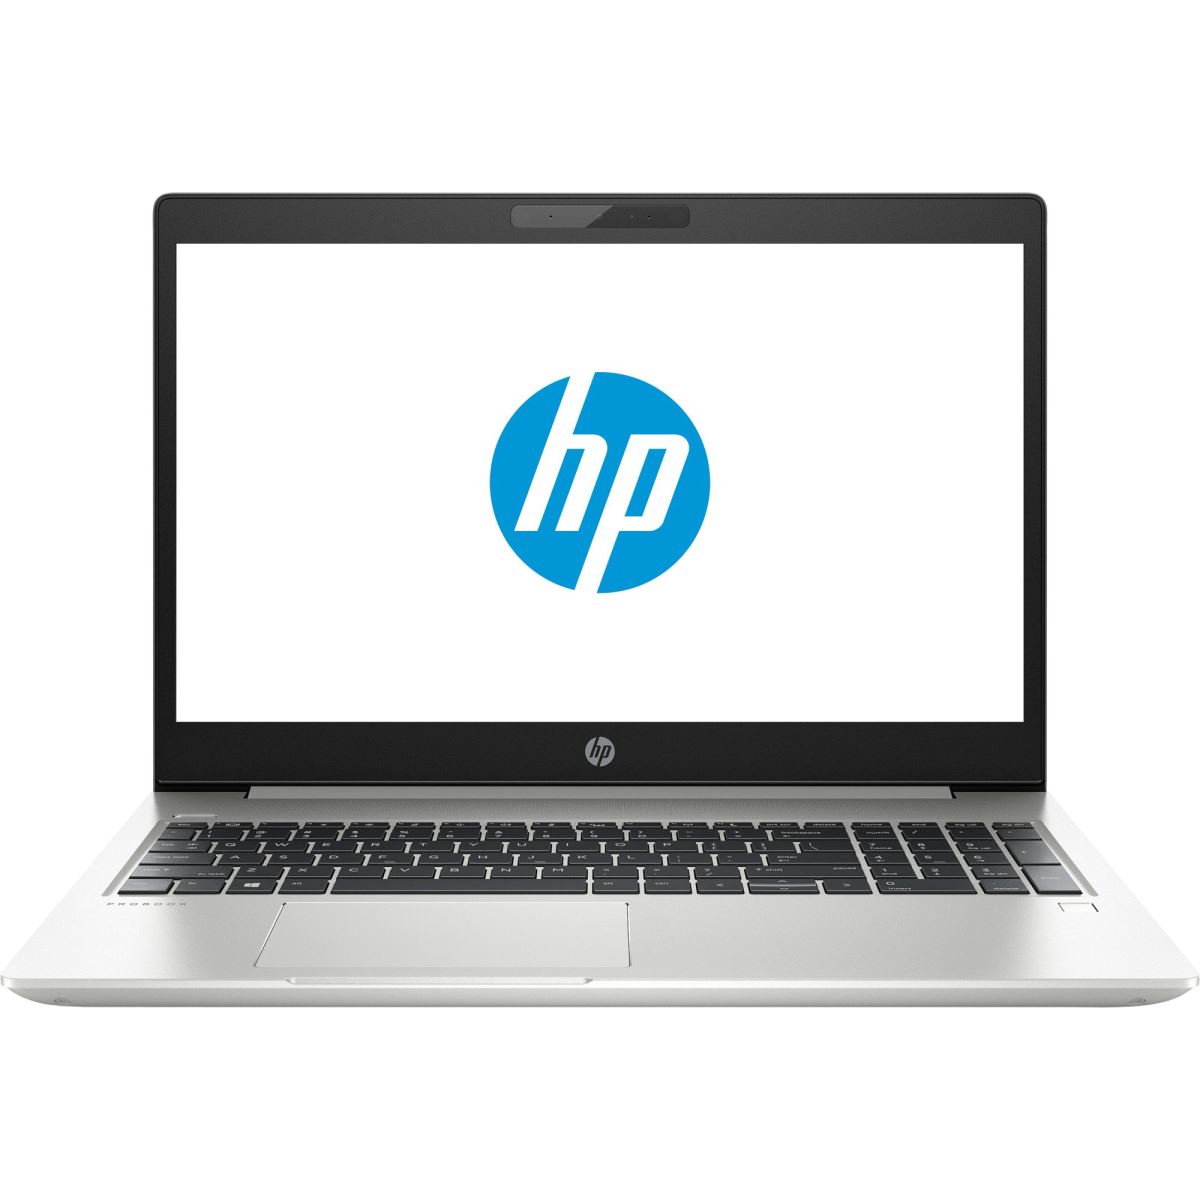 Laptop HP ProBook 450 G6, 15.6”, LED FHD Anti-Glare, Intel Core i5-8265U Quad Core, RAM 8GB DDR4, HDD 1TB, Free DOS